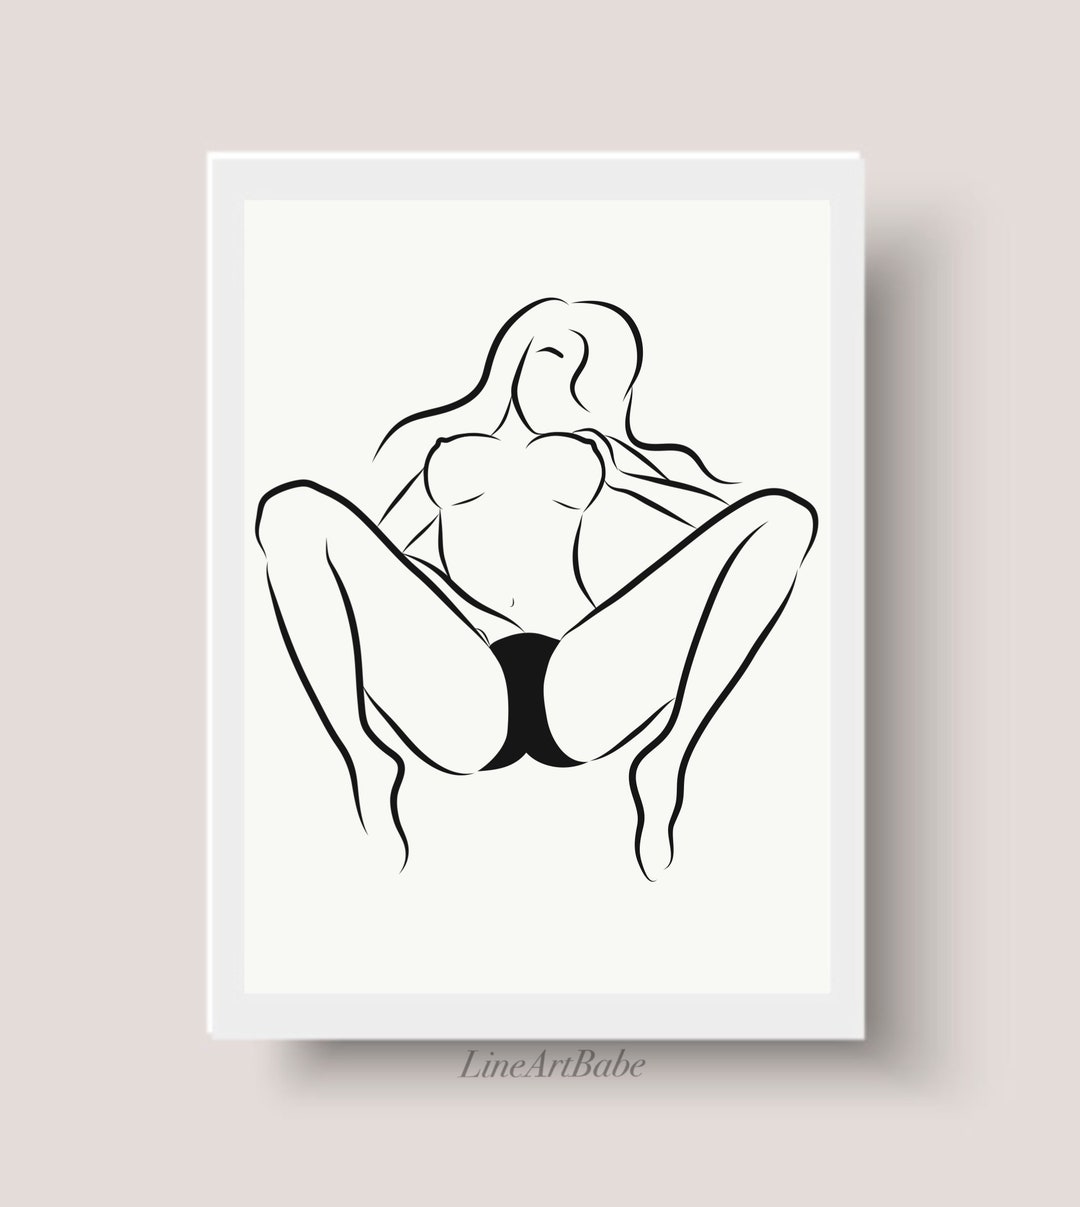 Sexy Line Art Print Woman Touching Herself Drawing image